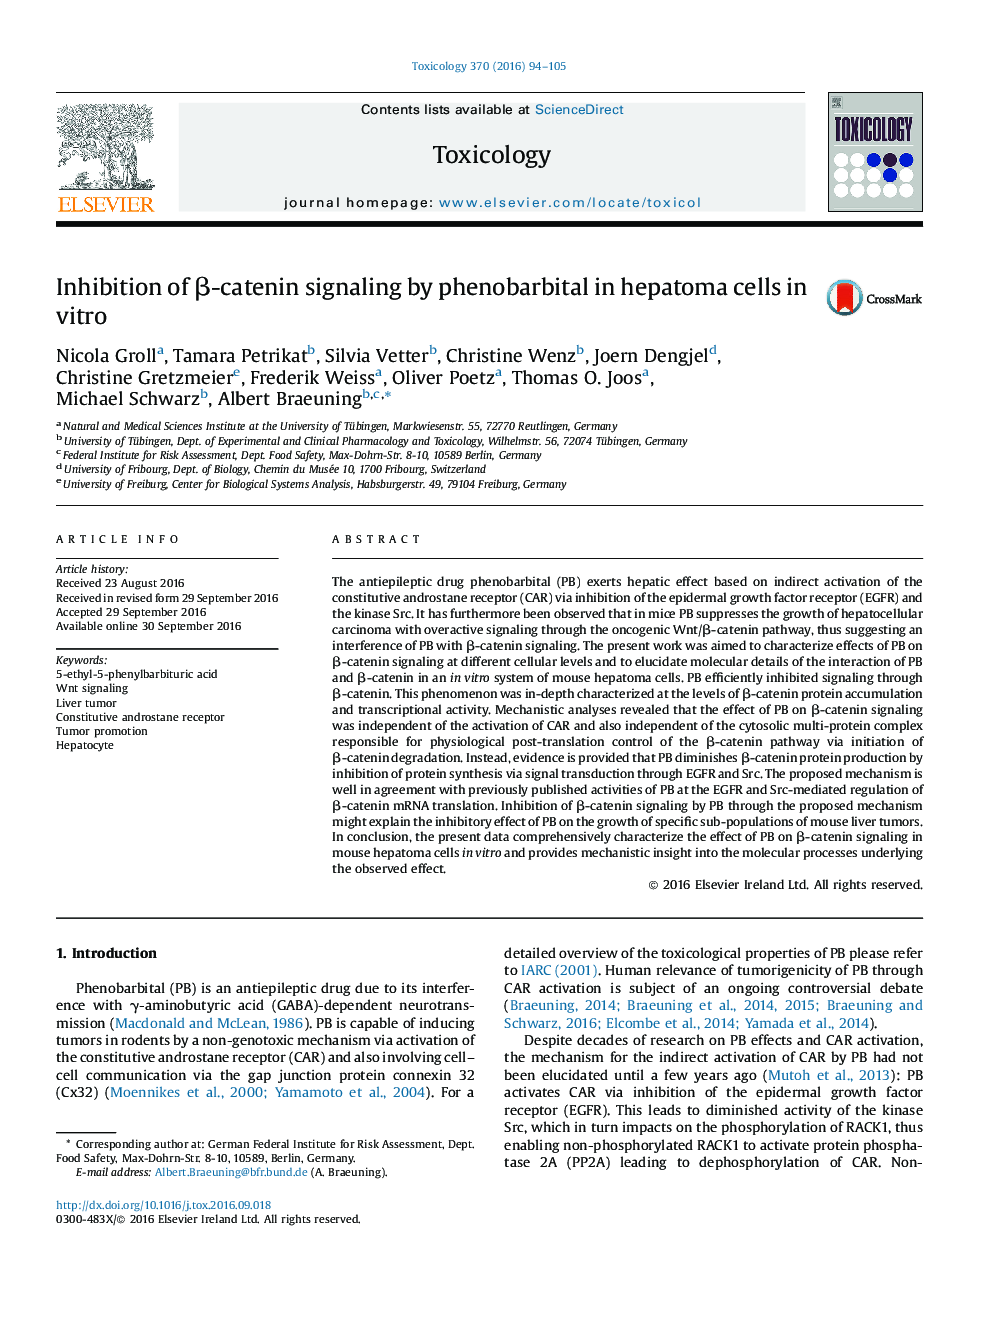 Inhibition of Î²-catenin signaling by phenobarbital in hepatoma cells in vitro